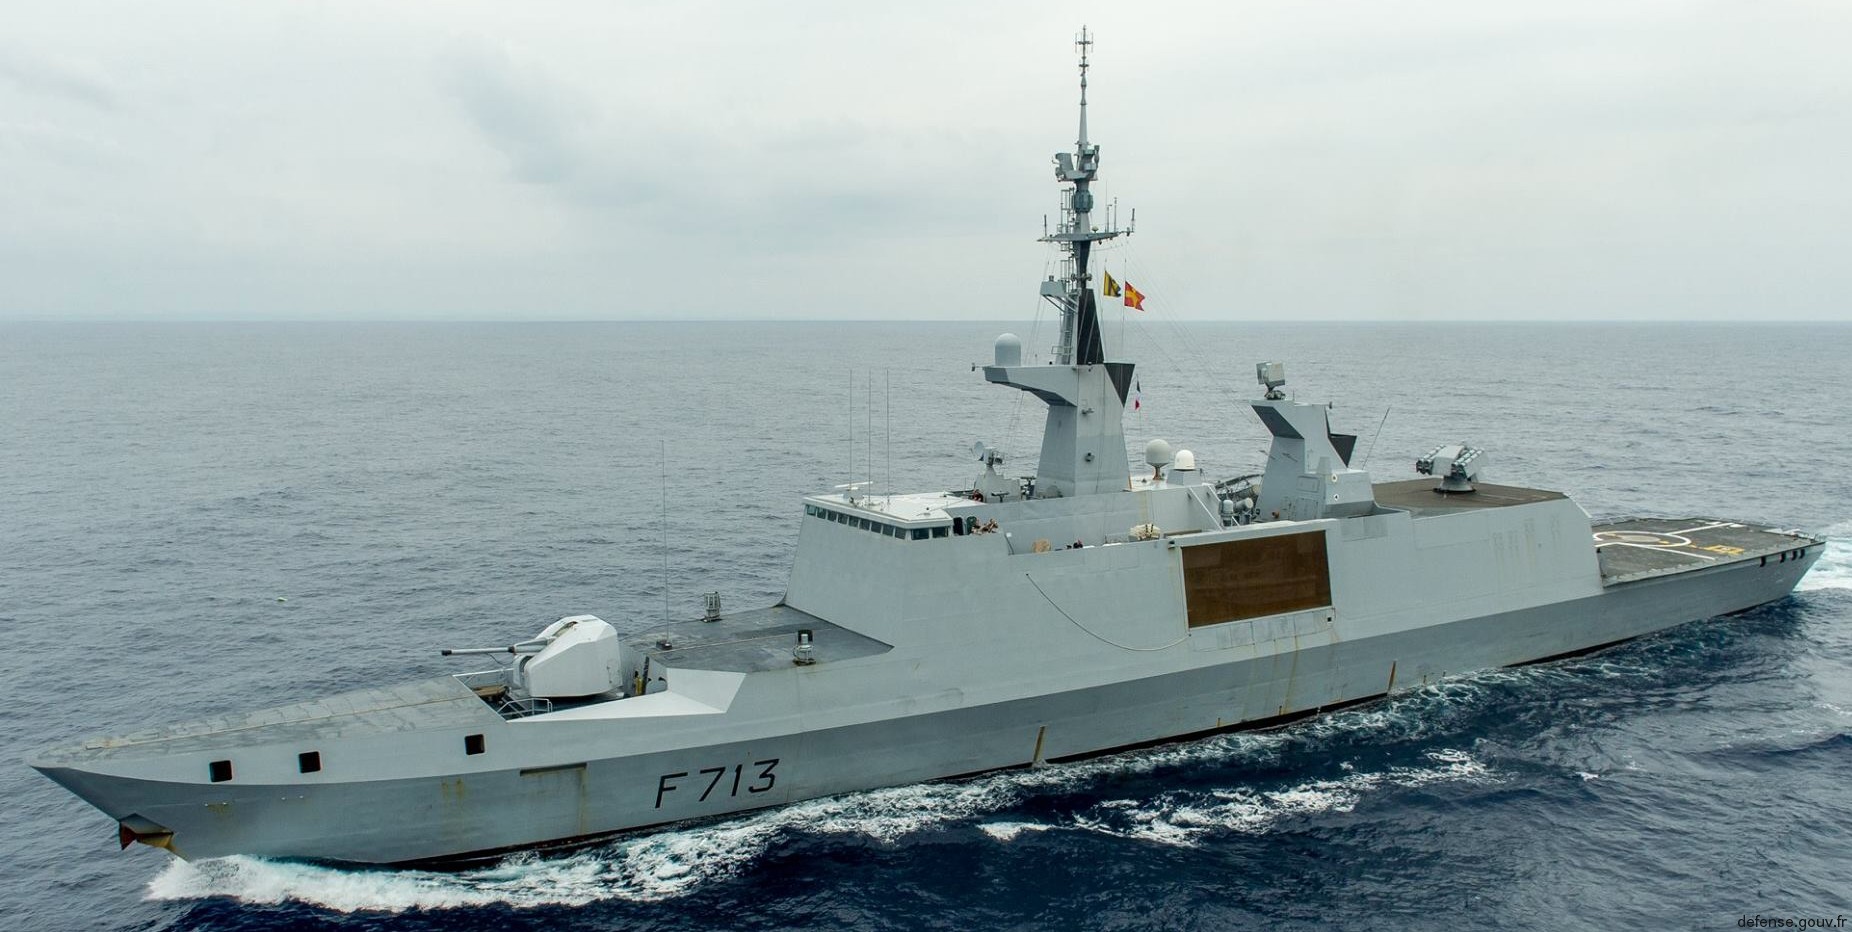 f-713 fs aconit la fayette class frigate flf french navy marine nationale 08